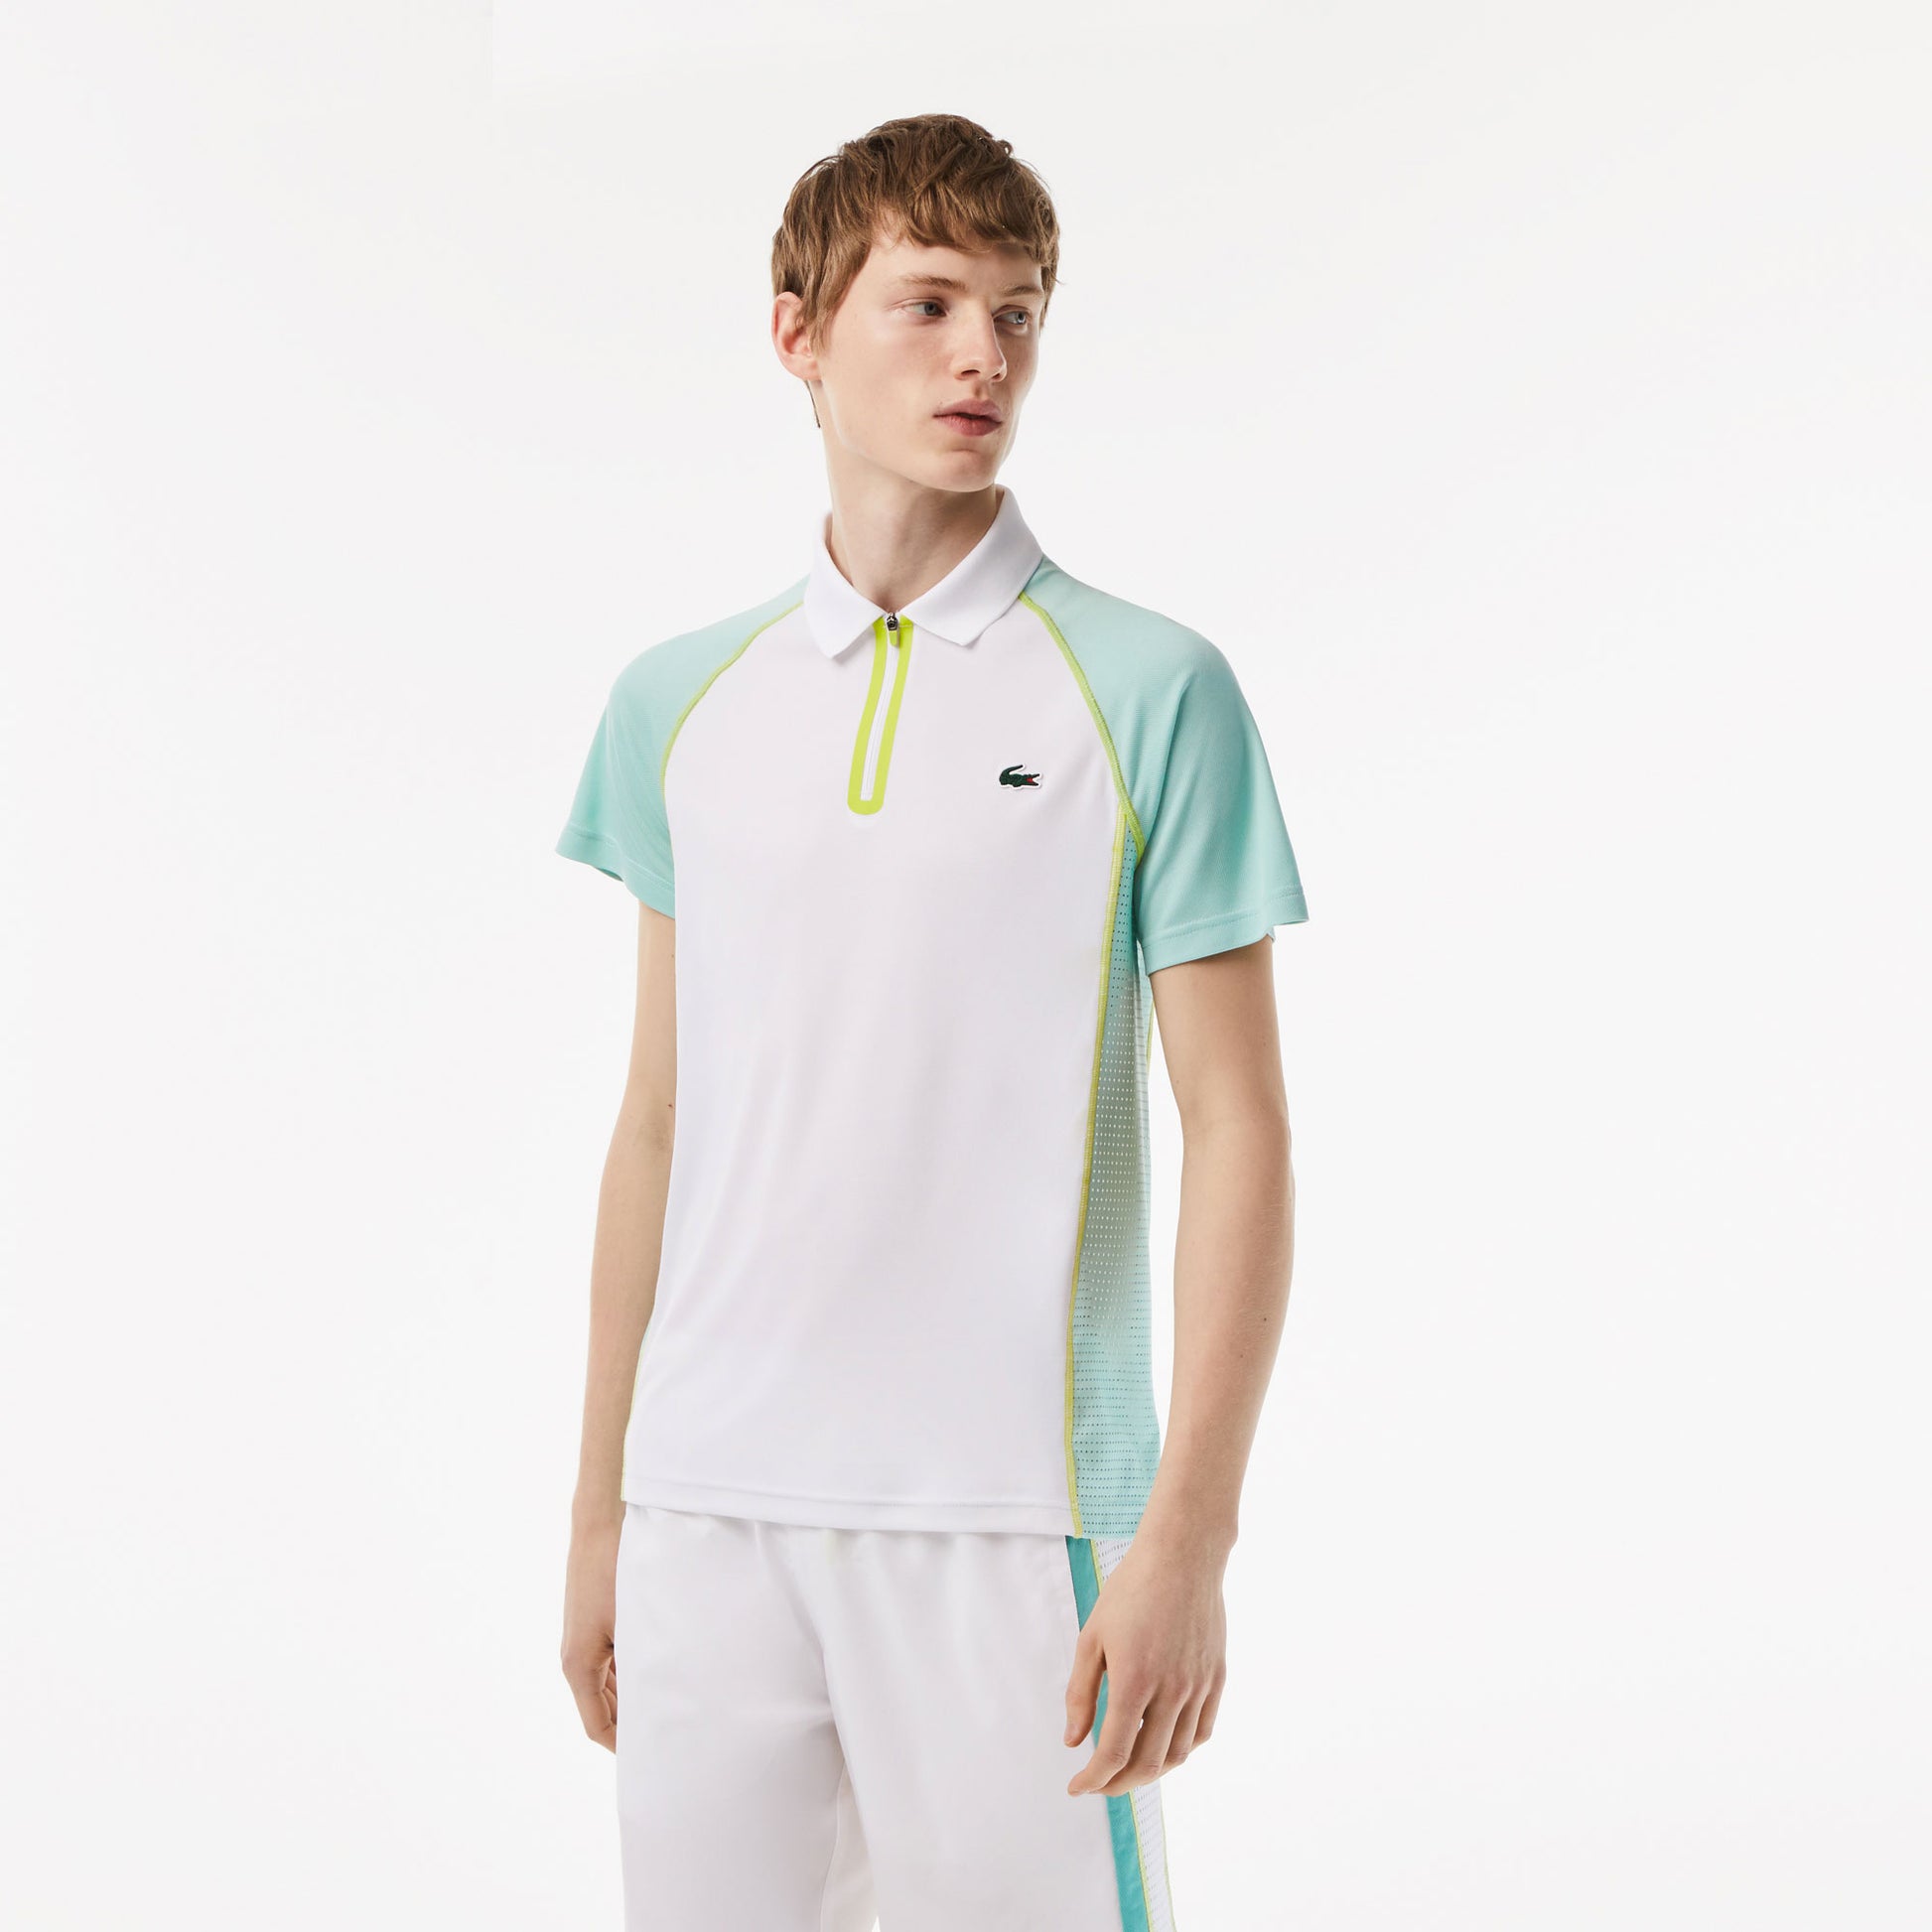 Lacoste Ultra Dry Men's Pique Tennis Polo White (1)